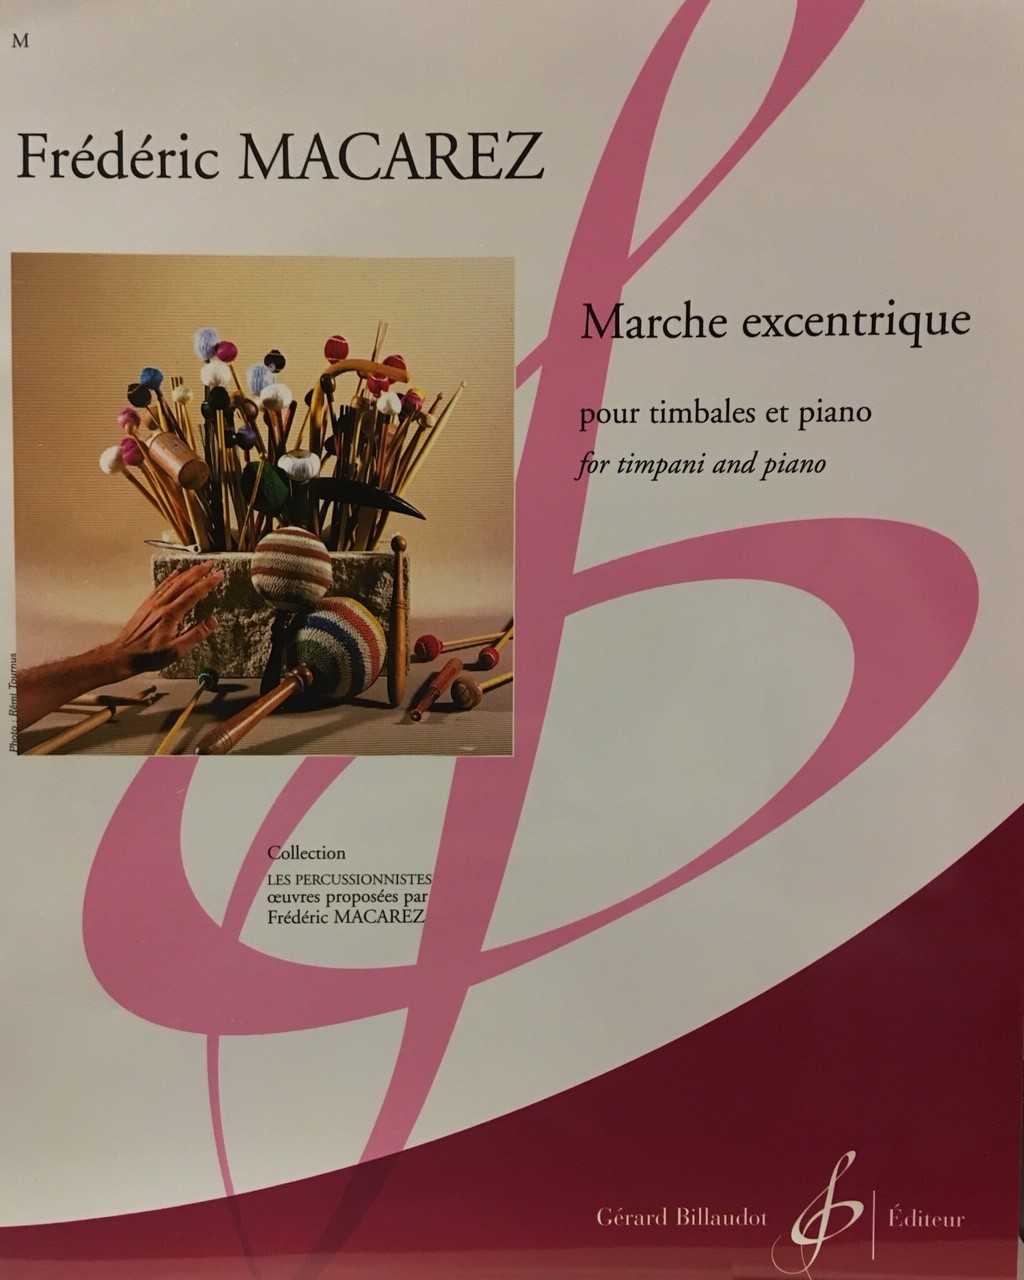 Marche Excentrique by Frederic Macarez